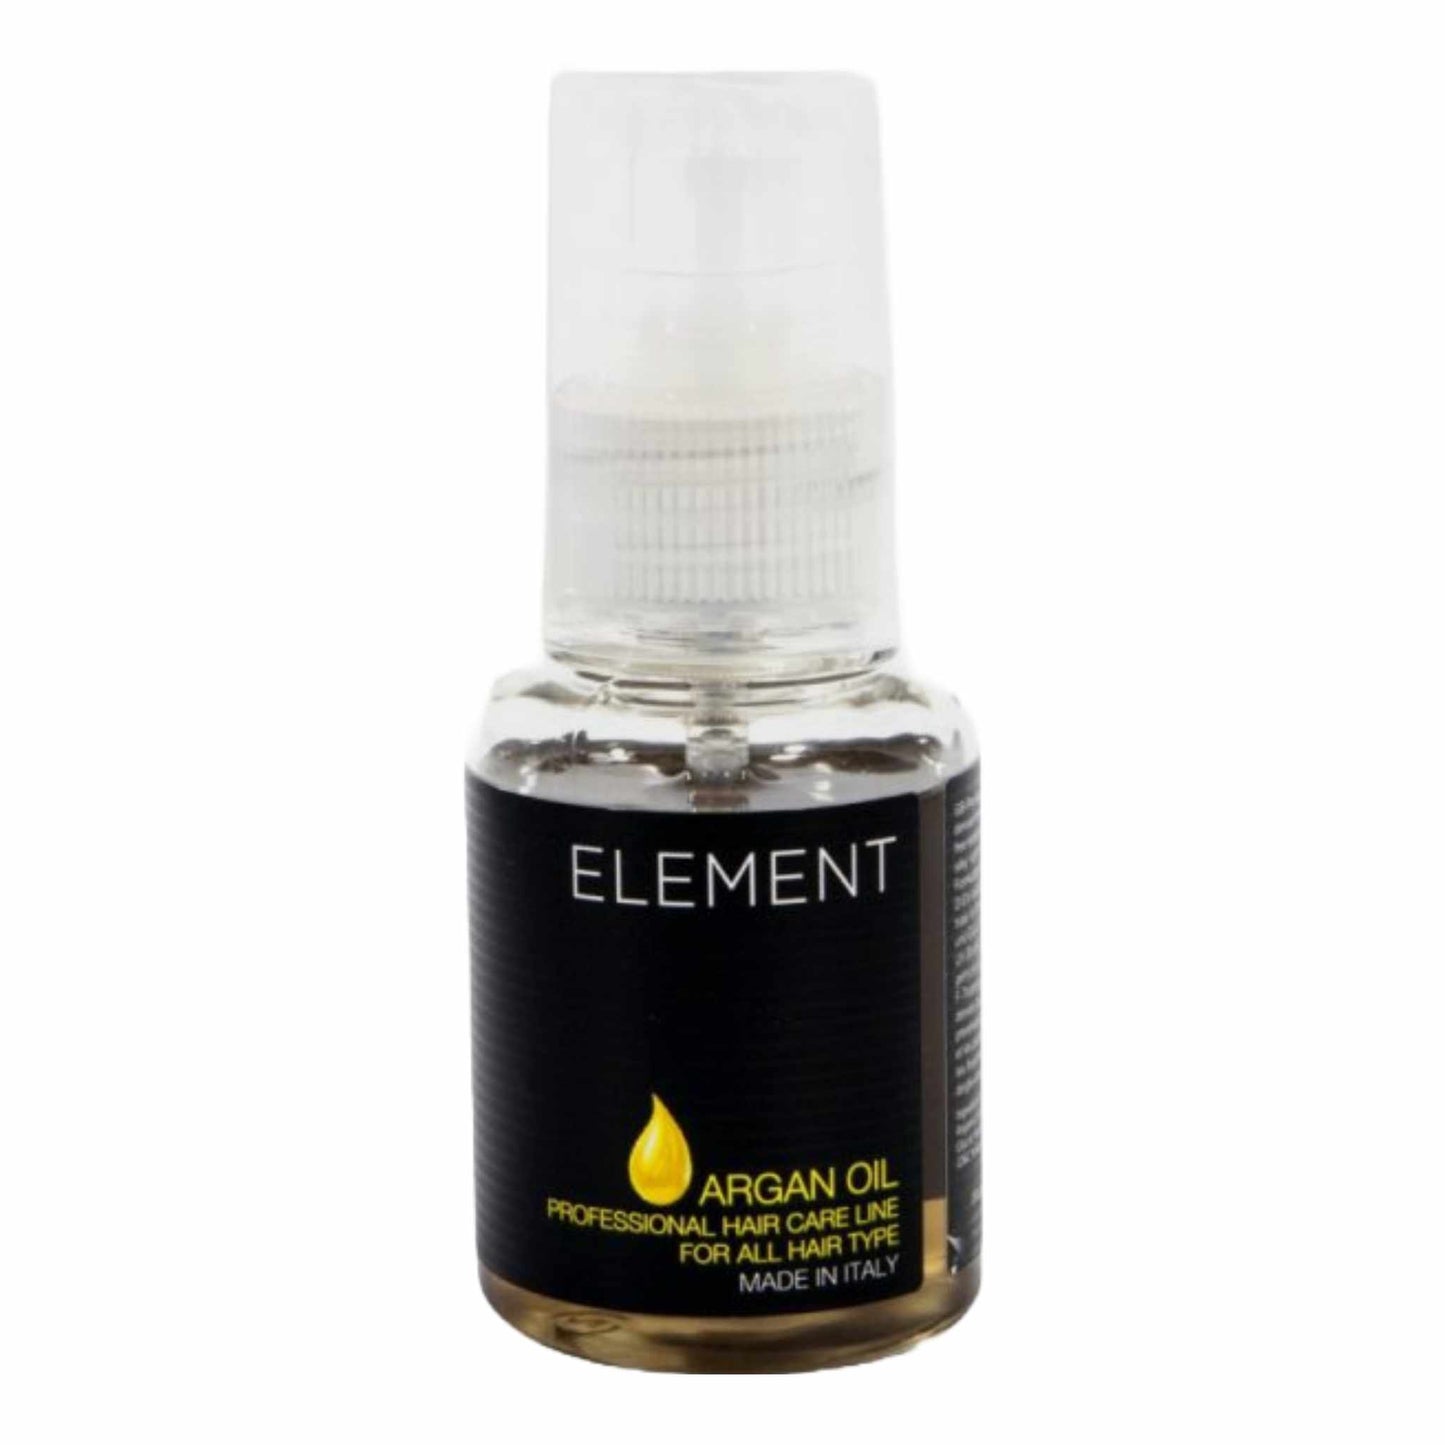 Element Argan Oil Professional Hair Care Line 50 ml